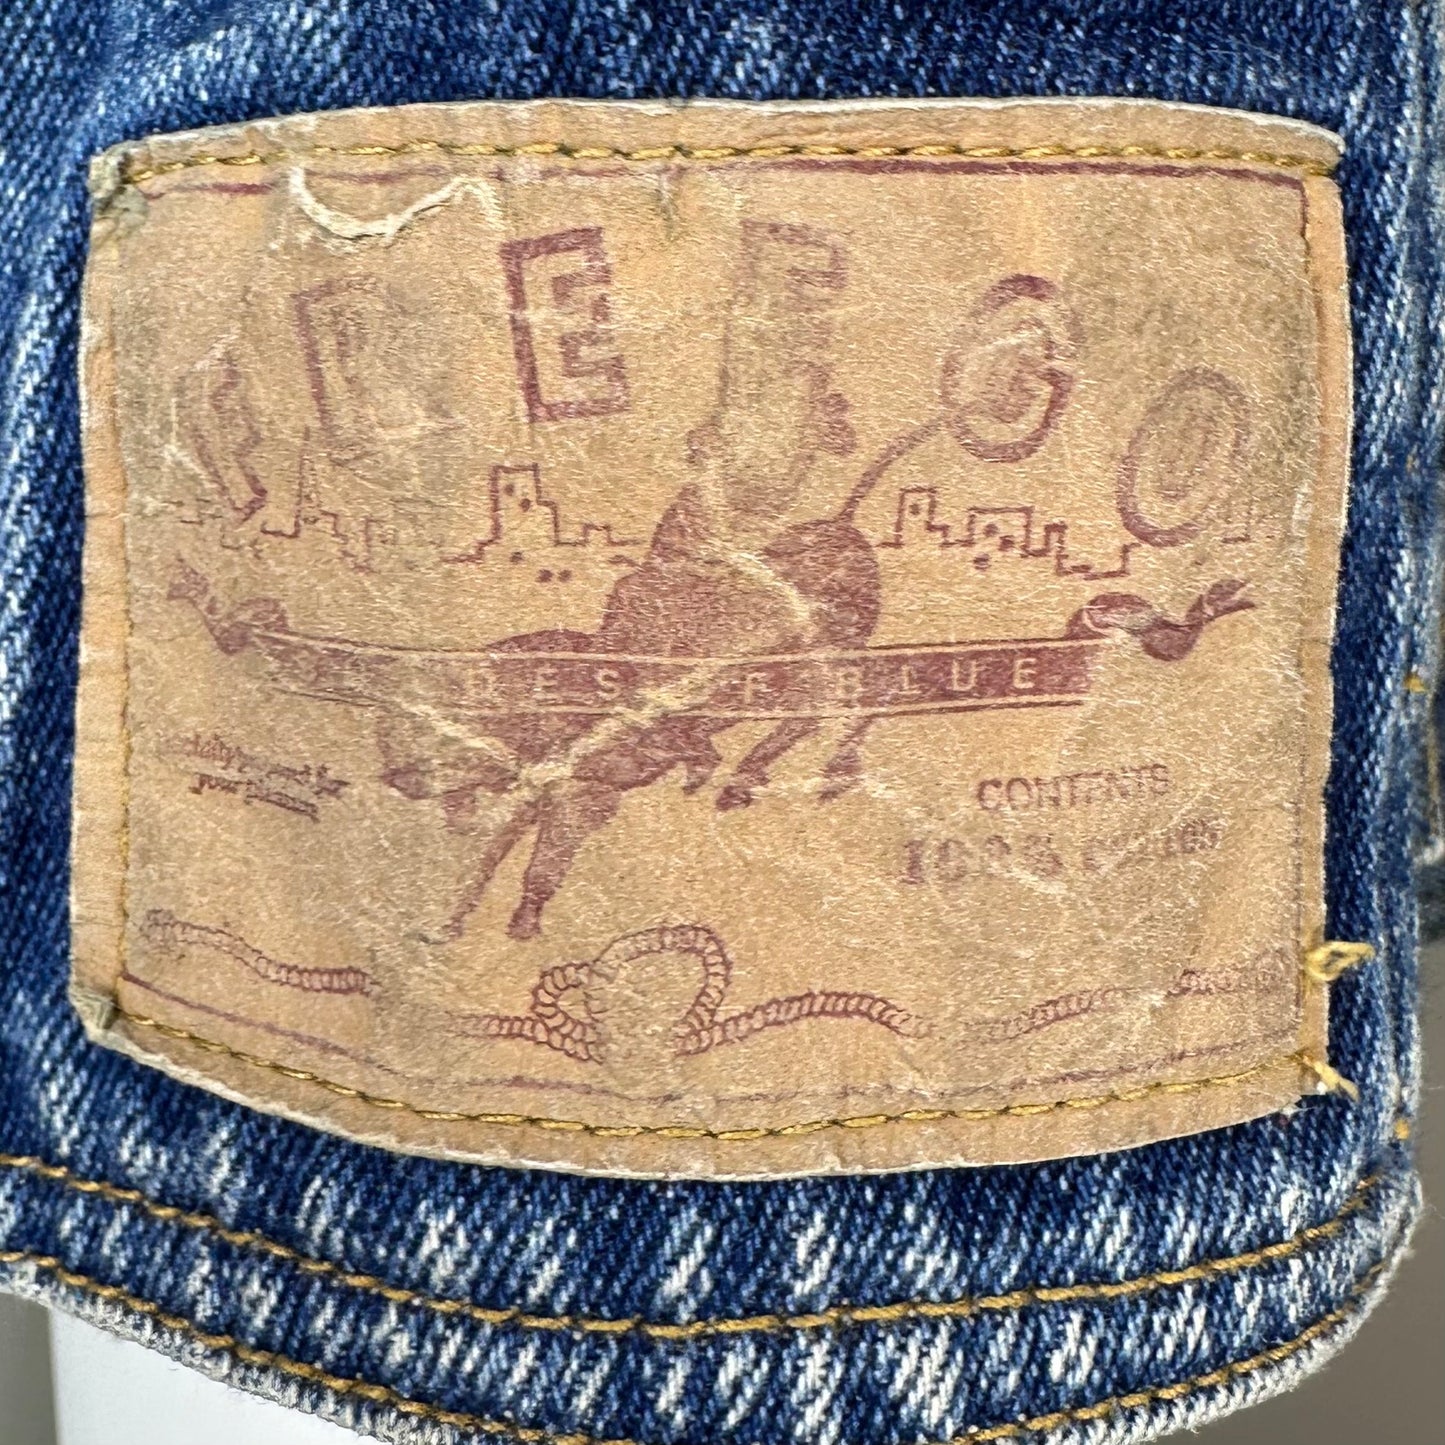 1980s Embellished Denim Jacket, Freego Size L-XXL, Rhinestones and Studs